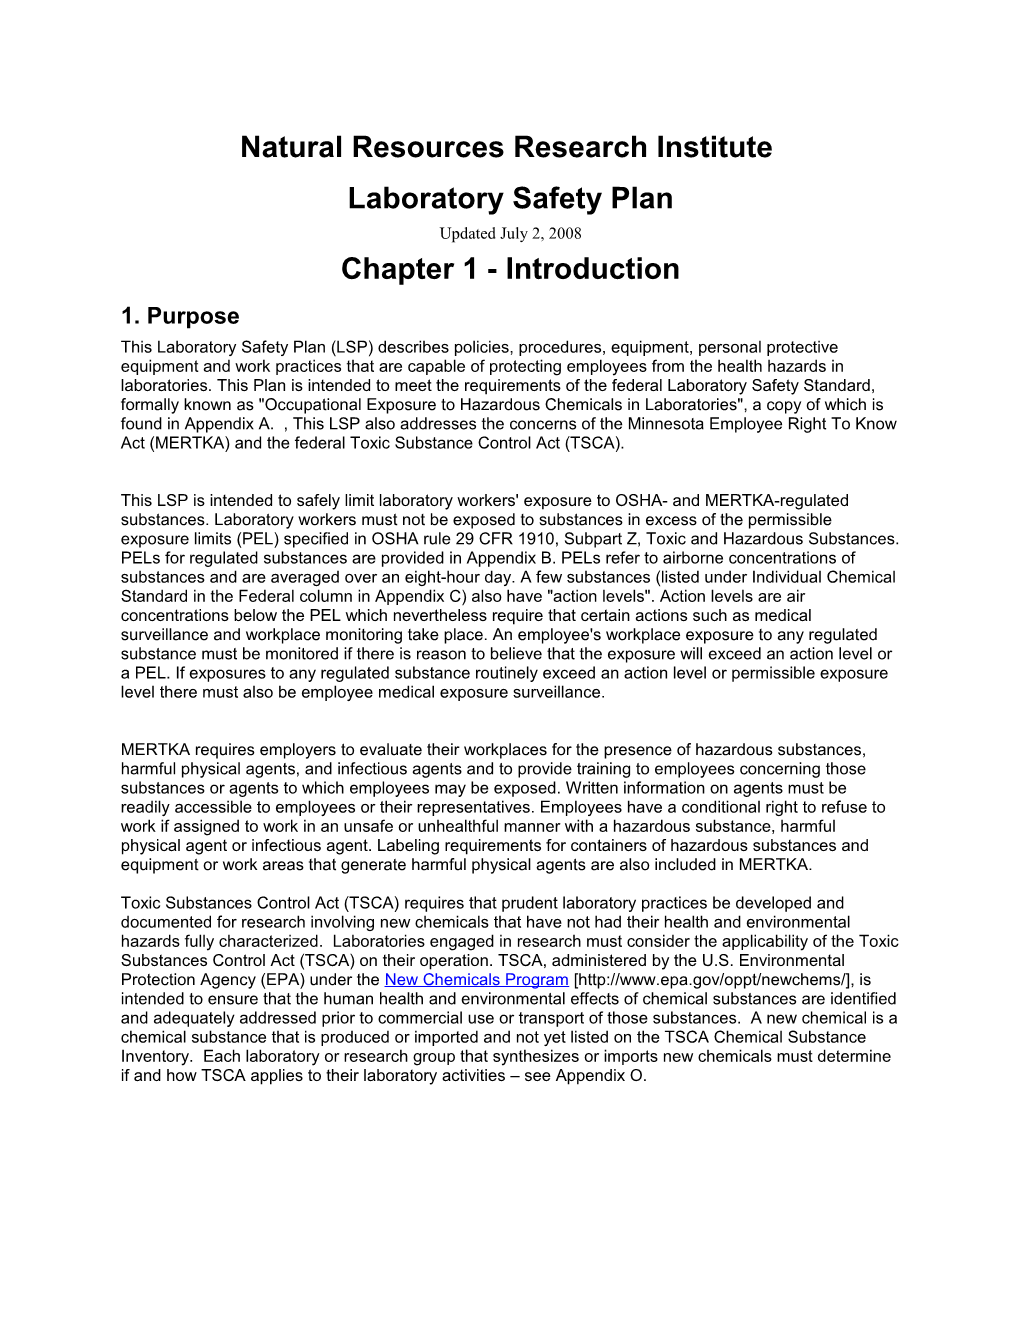 U of MN Lab Safety Plan